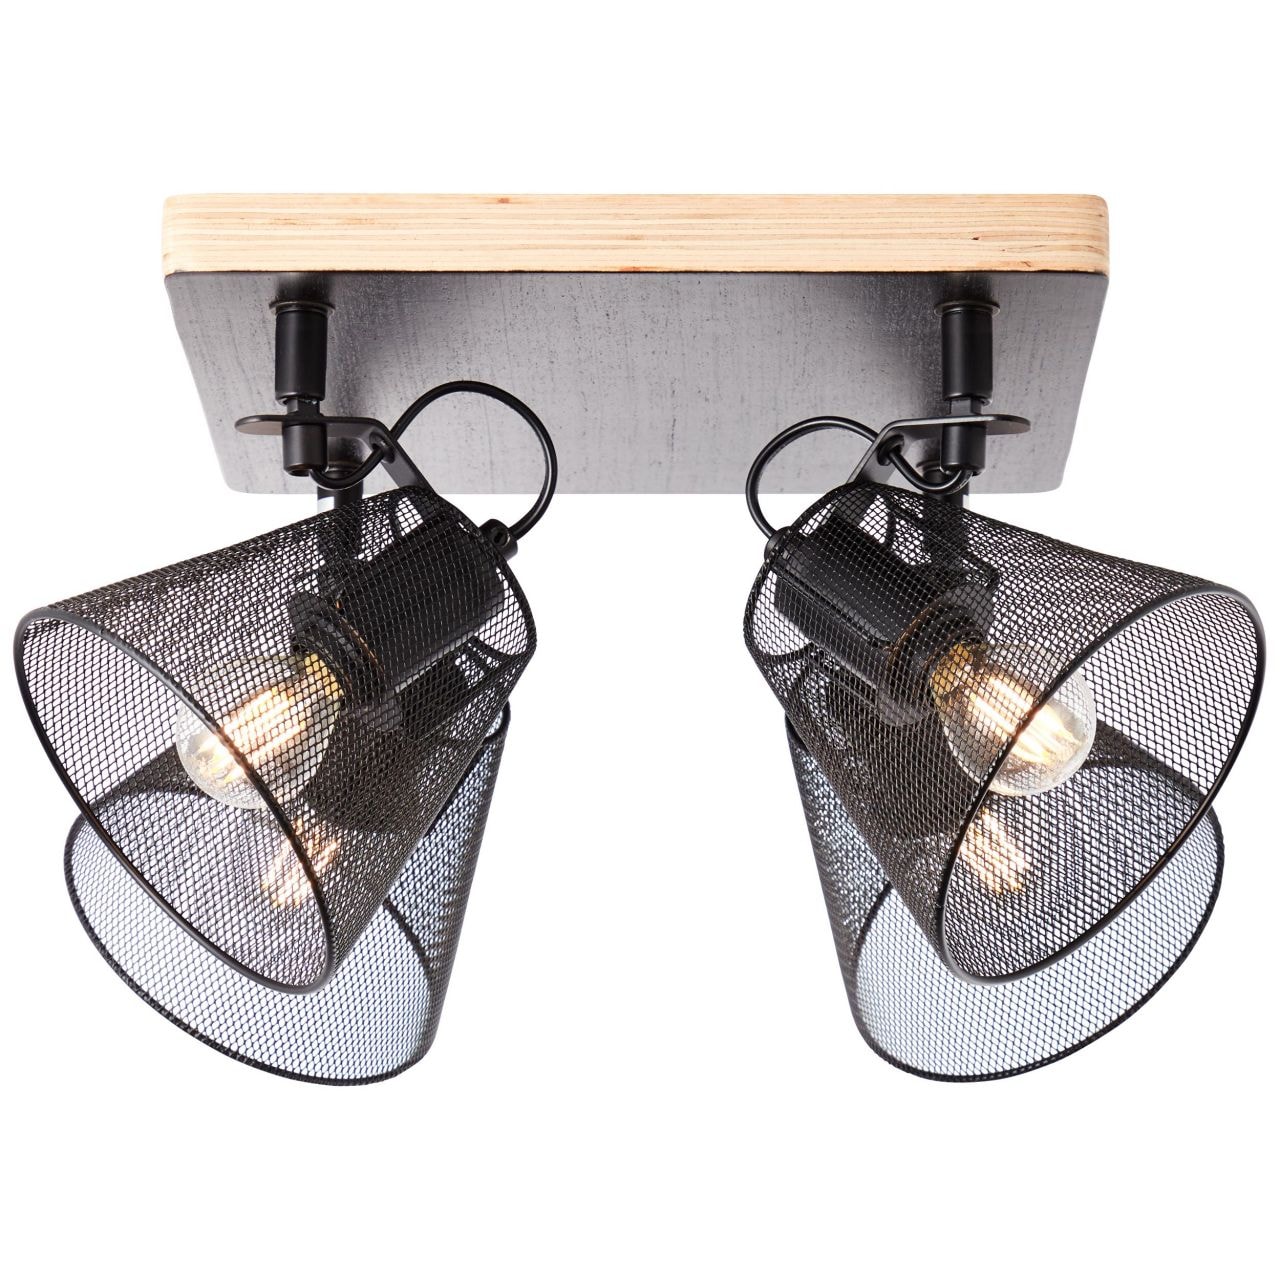 BRILLIANT Lampe, Whole Spotplatte 4flg schwarz/holzfarbend, Metall/Holz, 4x D45, E14, 40W,Tropfenlampen (nicht enthalten